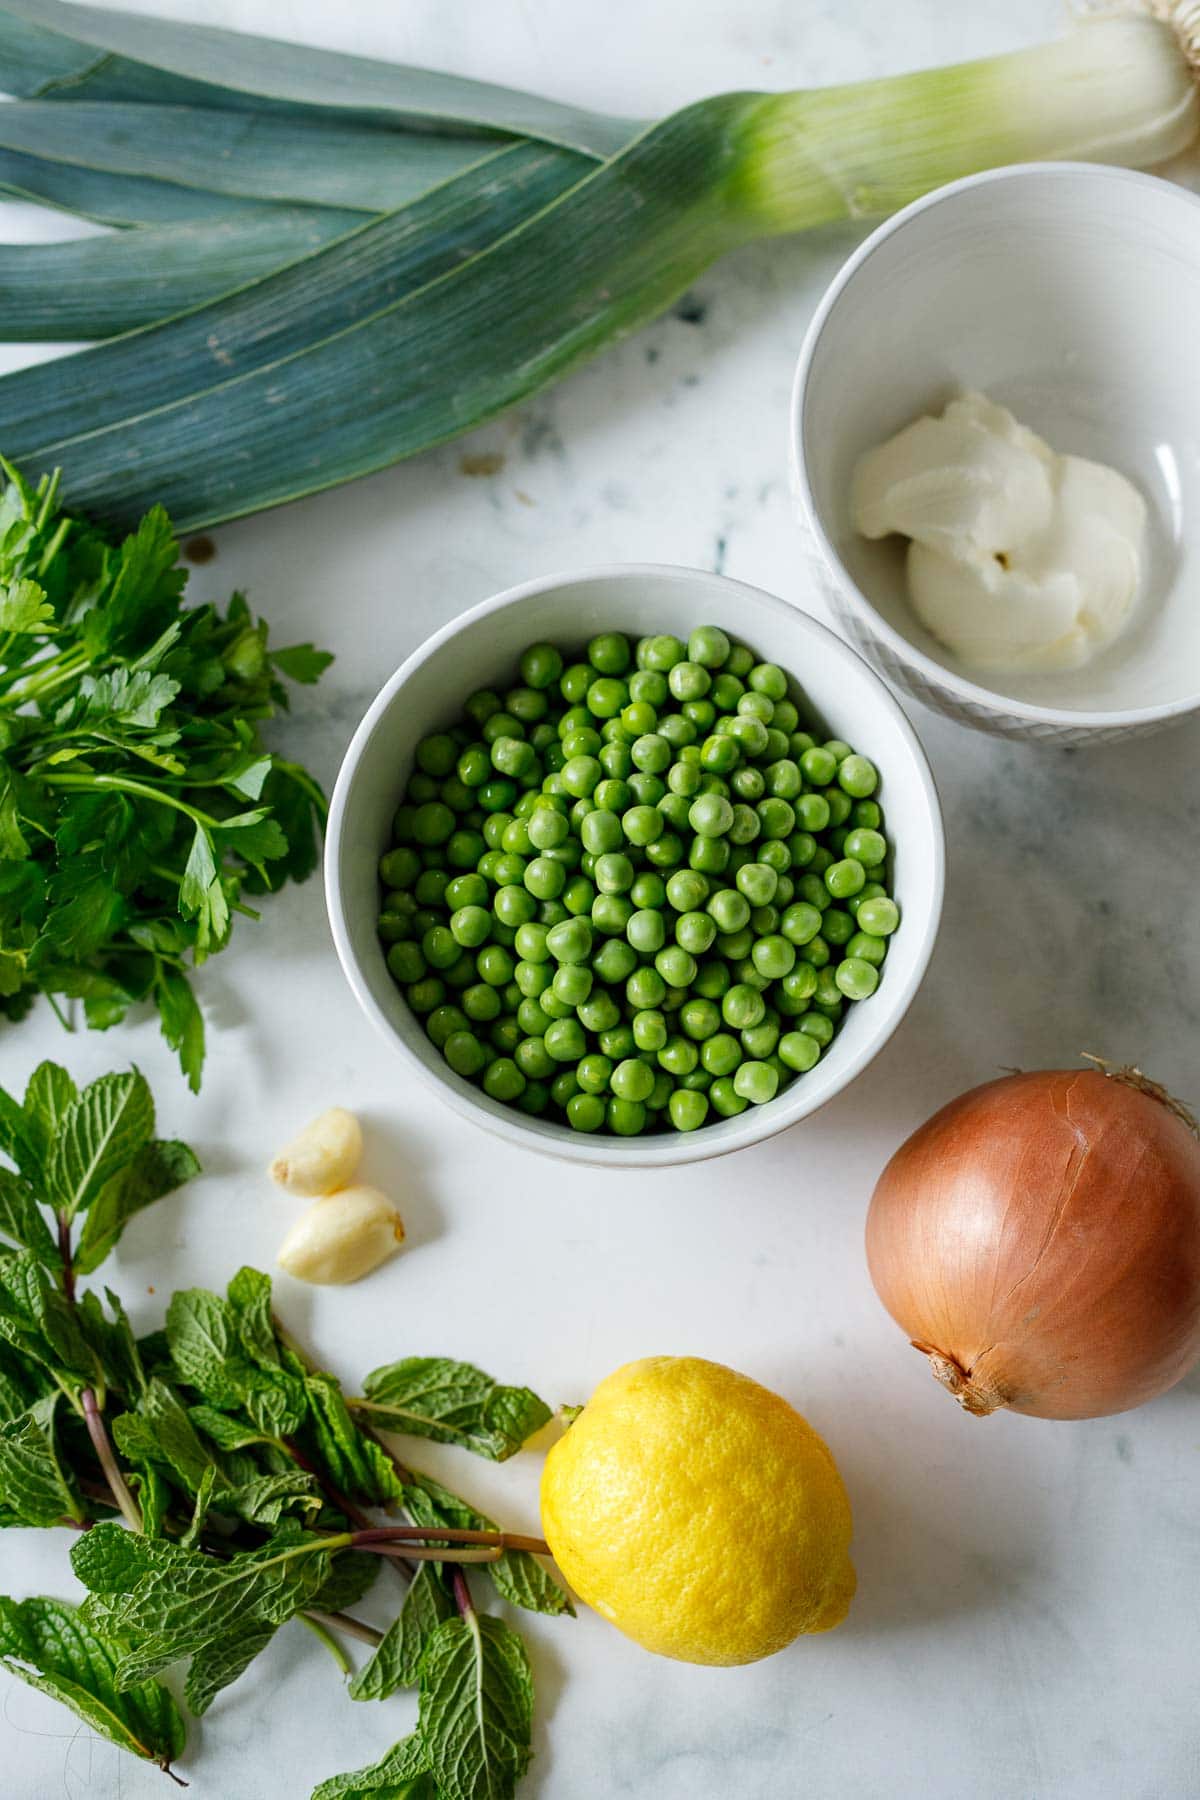 ingredients for minted pea soup - peas, onion, lemon, garlic, mint, parsley, sour cream, leek.